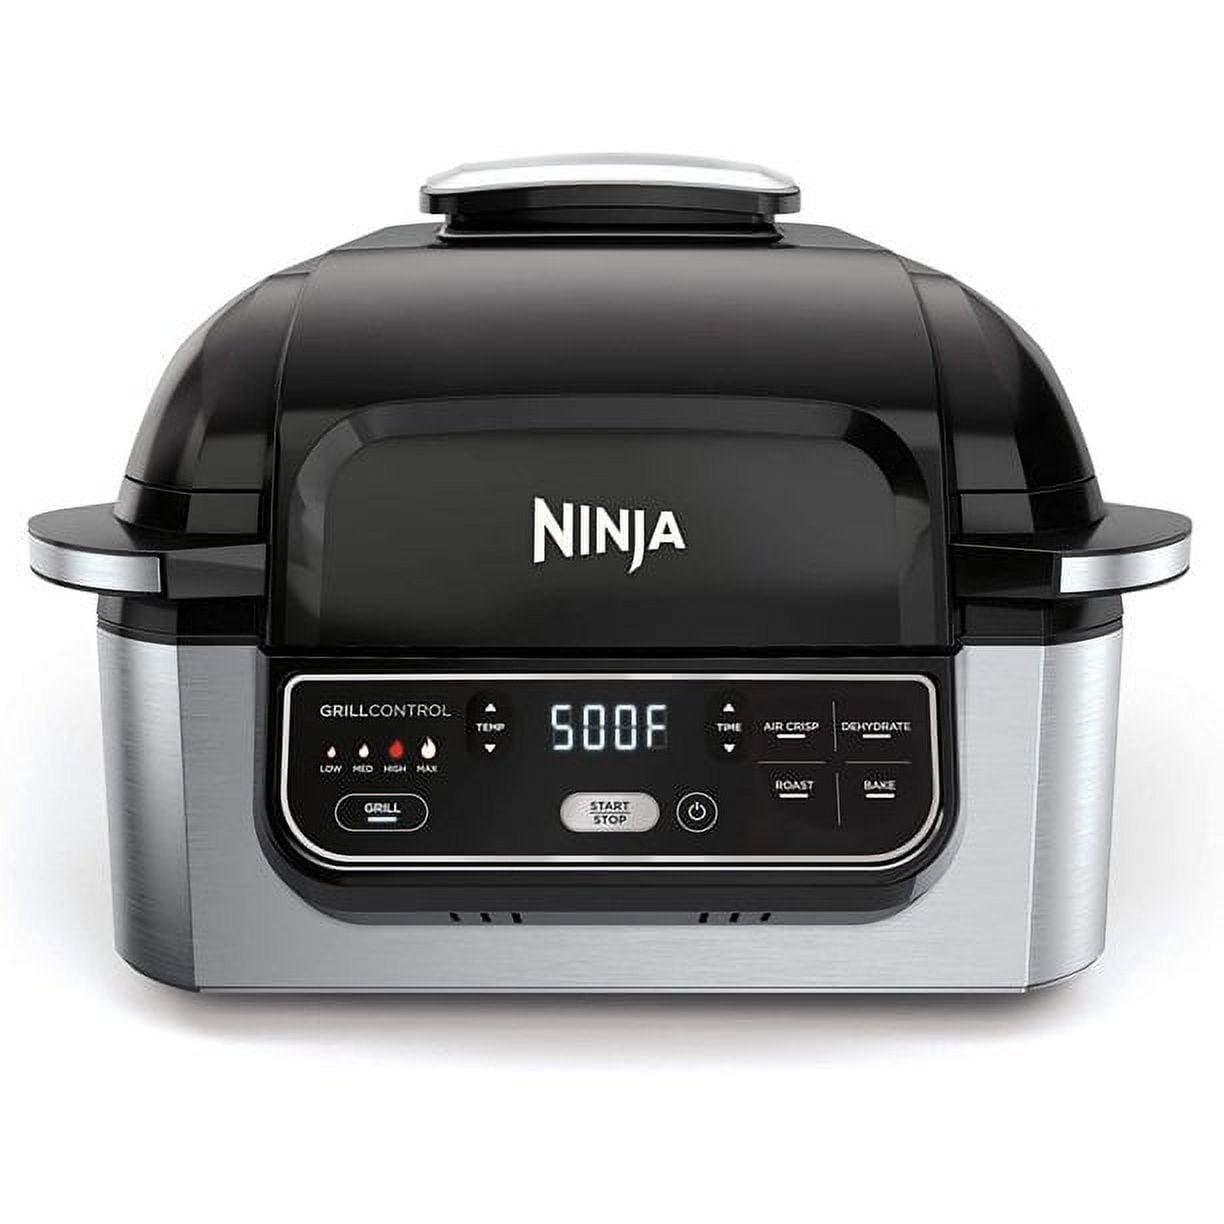 Ninja Air fryer - appliances - by owner - sale - craigslist